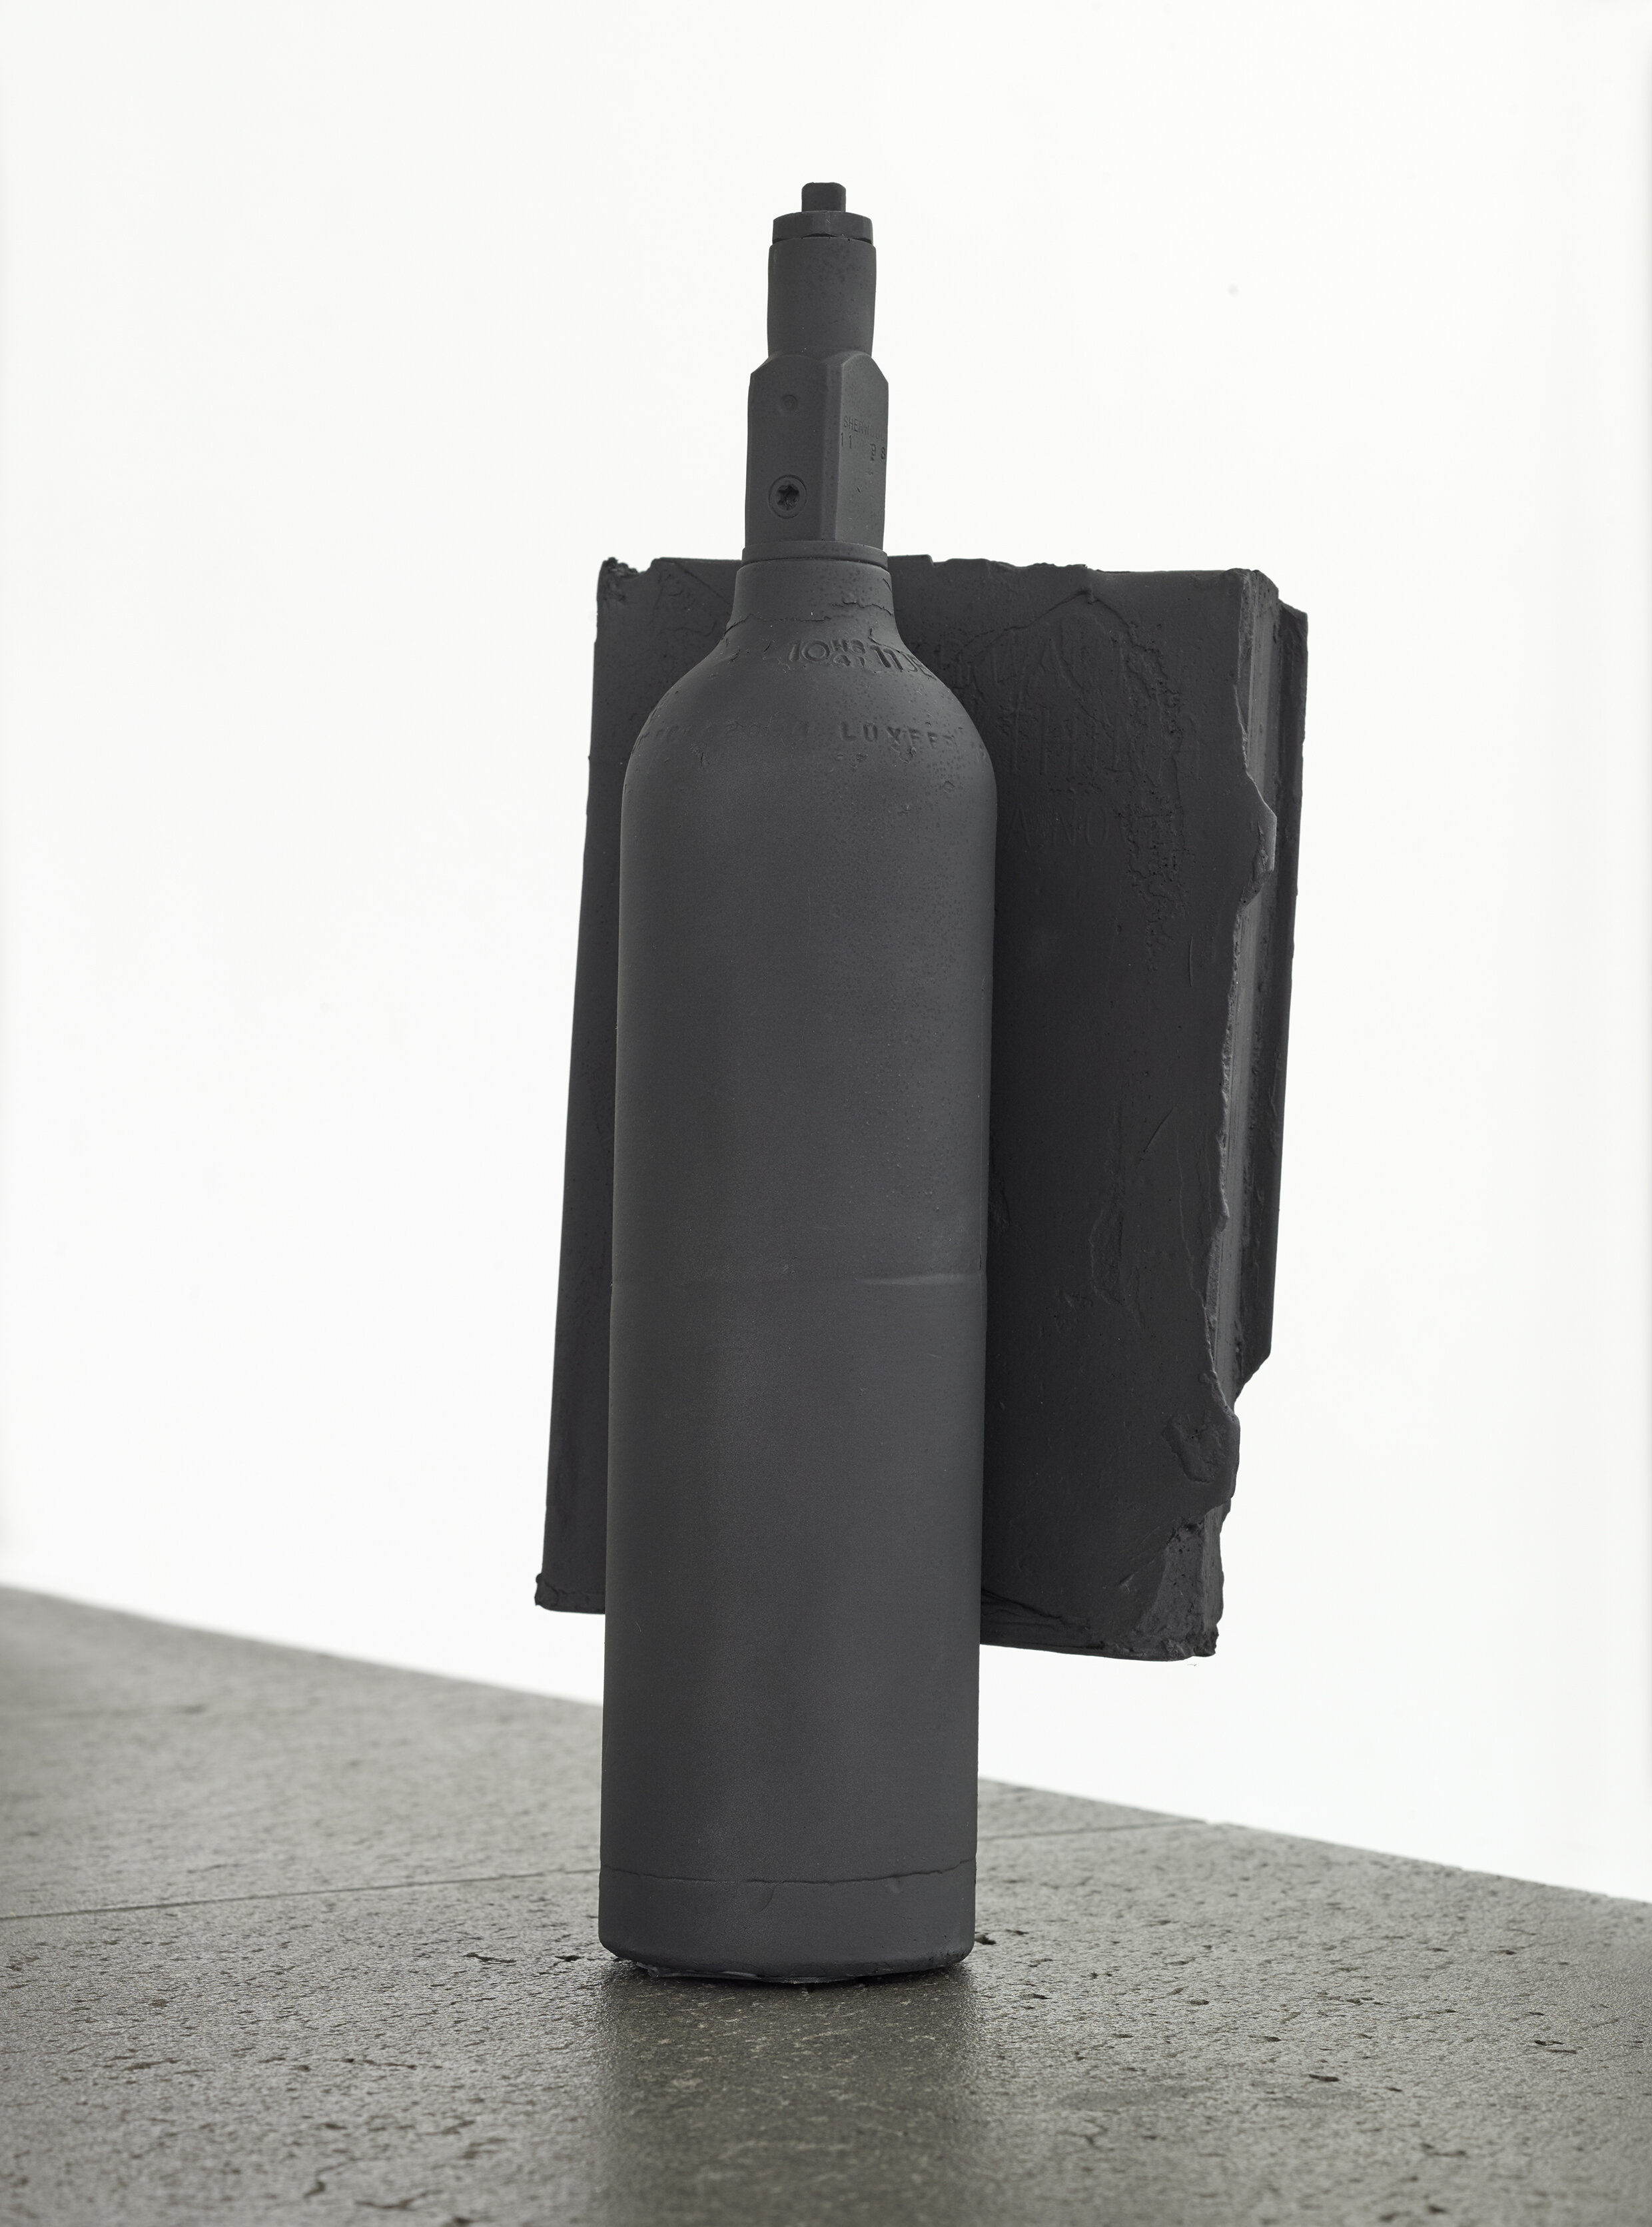  Untitled, 2015. Polyurethane and enamel. 15.5 x 6.5 x 4.5 inches 